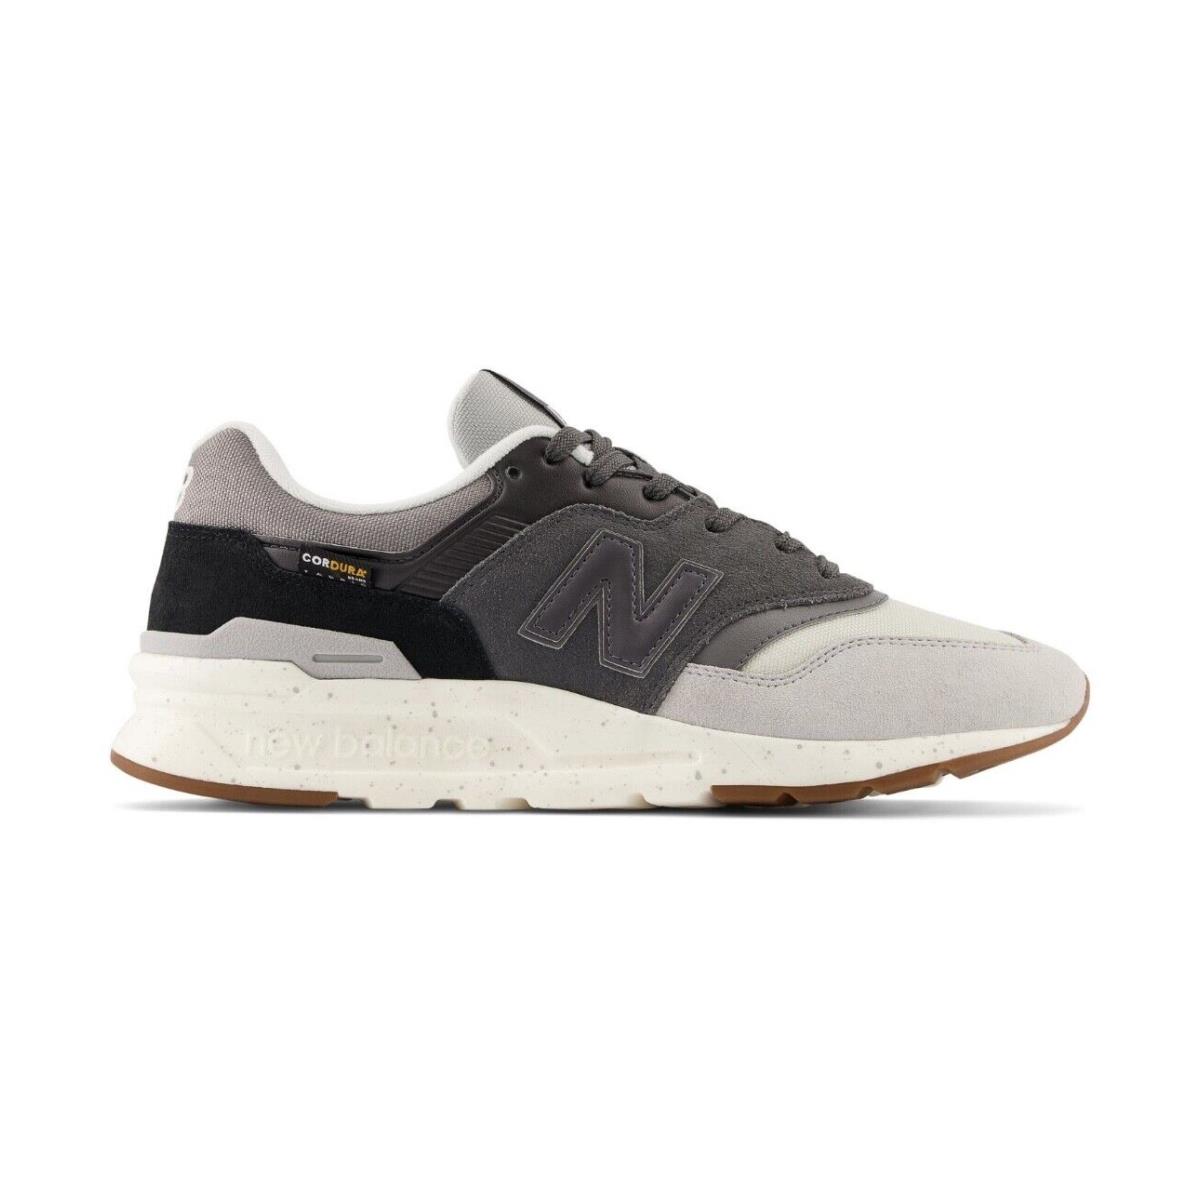 New Balance 997H Cordura Men`s Suede Athletic Running Casual Fashion Shoes Dark Gray/Light Gray